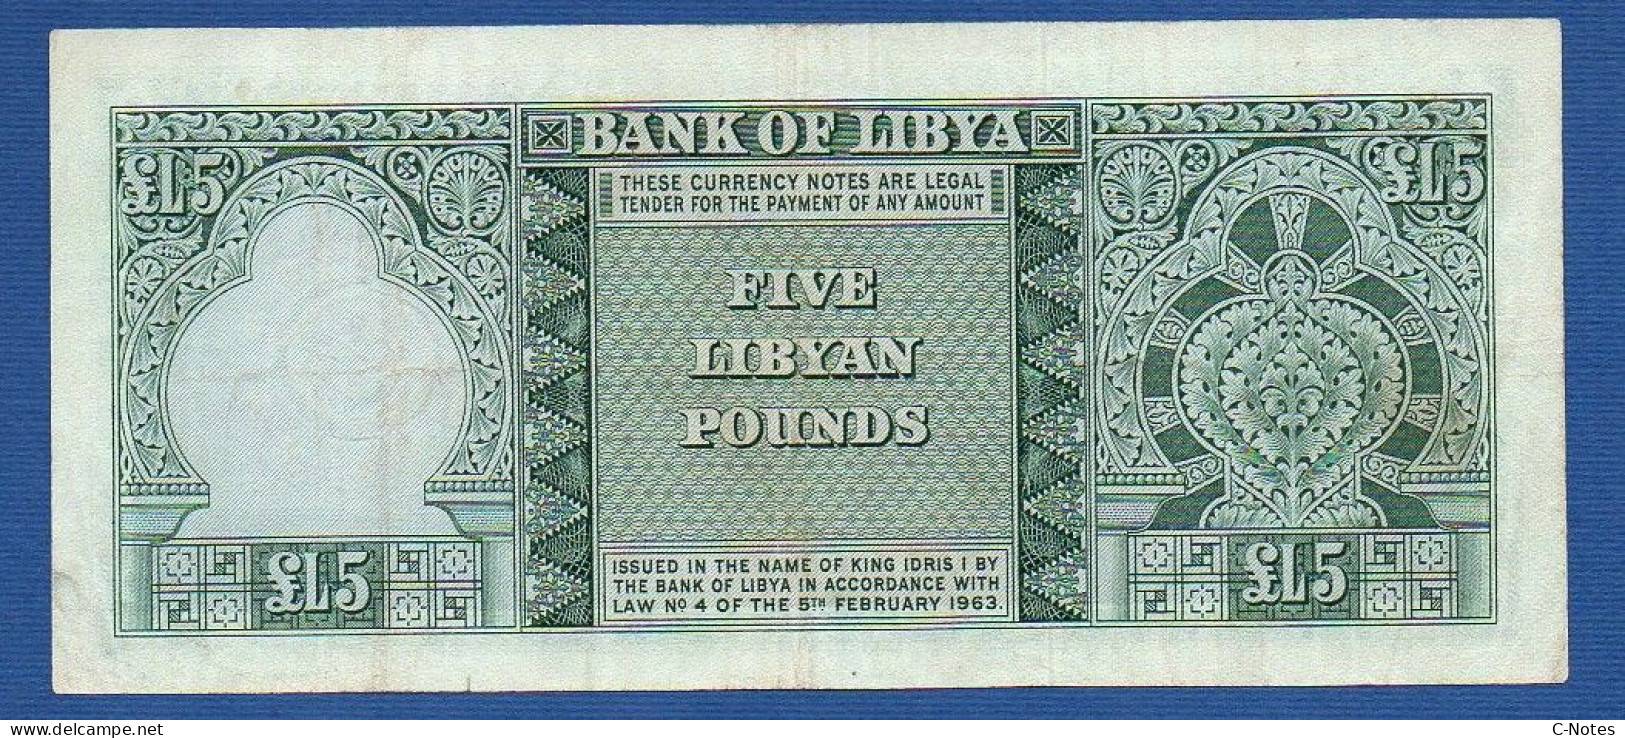 LIBYA - P.31 – 5 Pounds 1963 VF, Serie 5 B/15 571650 - Libia